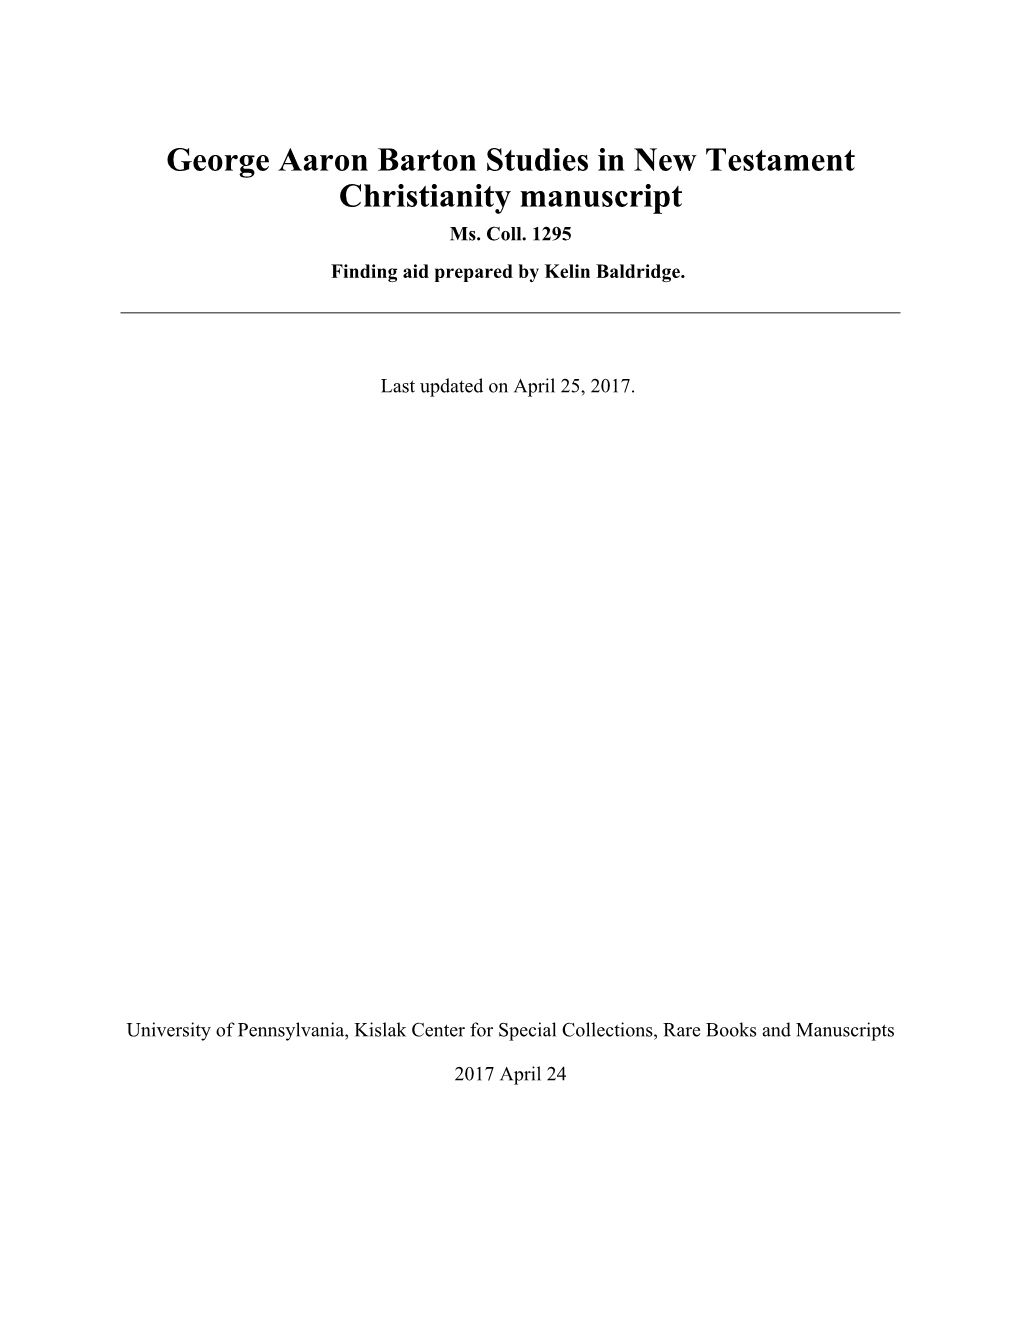 George Aaron Barton Studies in New Testament Christianity Manuscript Ms